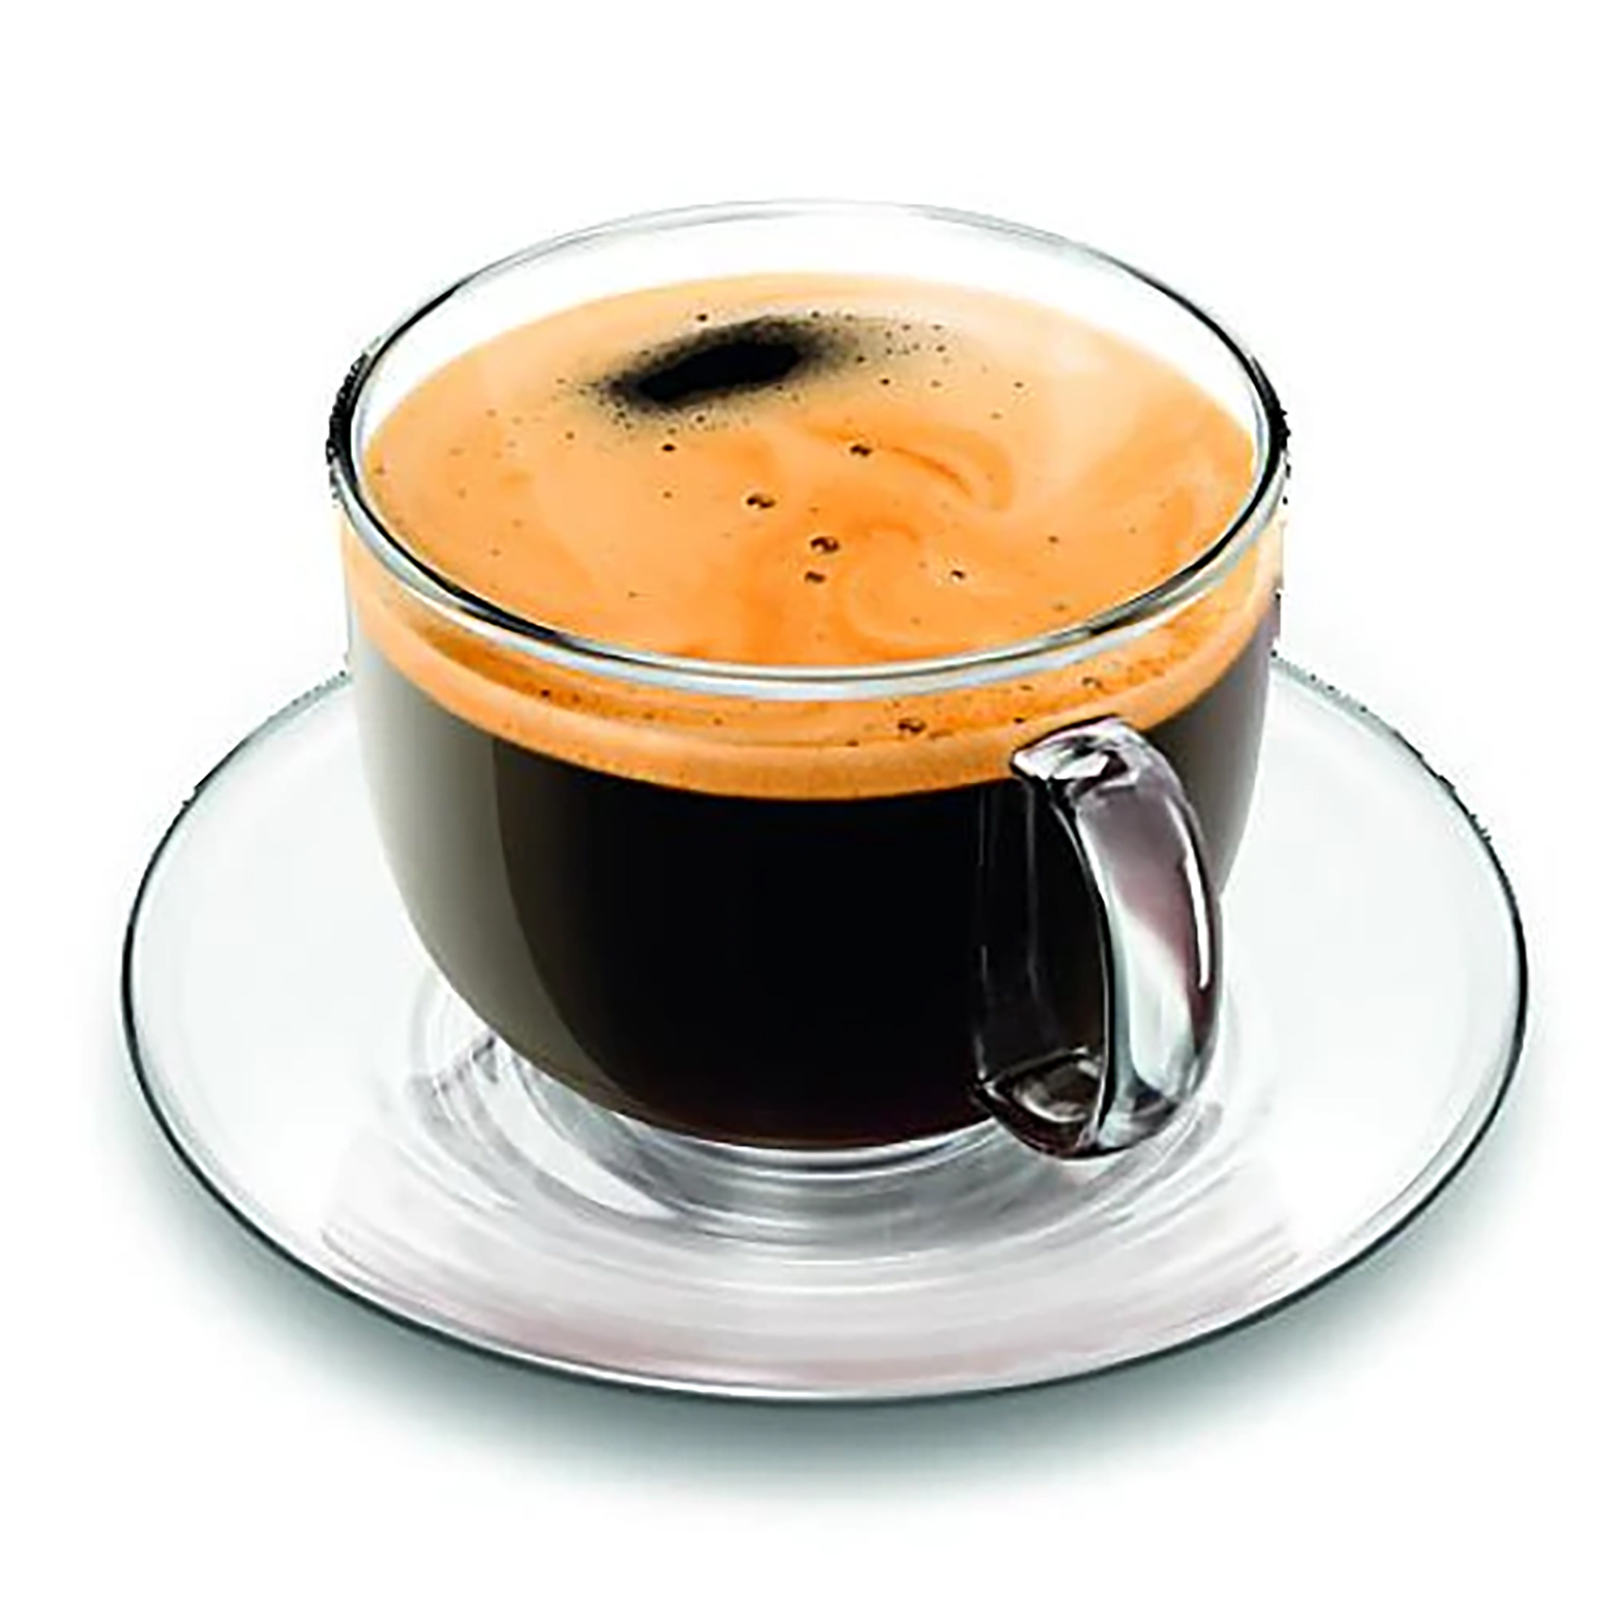 Capsule cafea, Jacobs Tassimo Choco Cappuccino, 8 bauturi x 190 ml